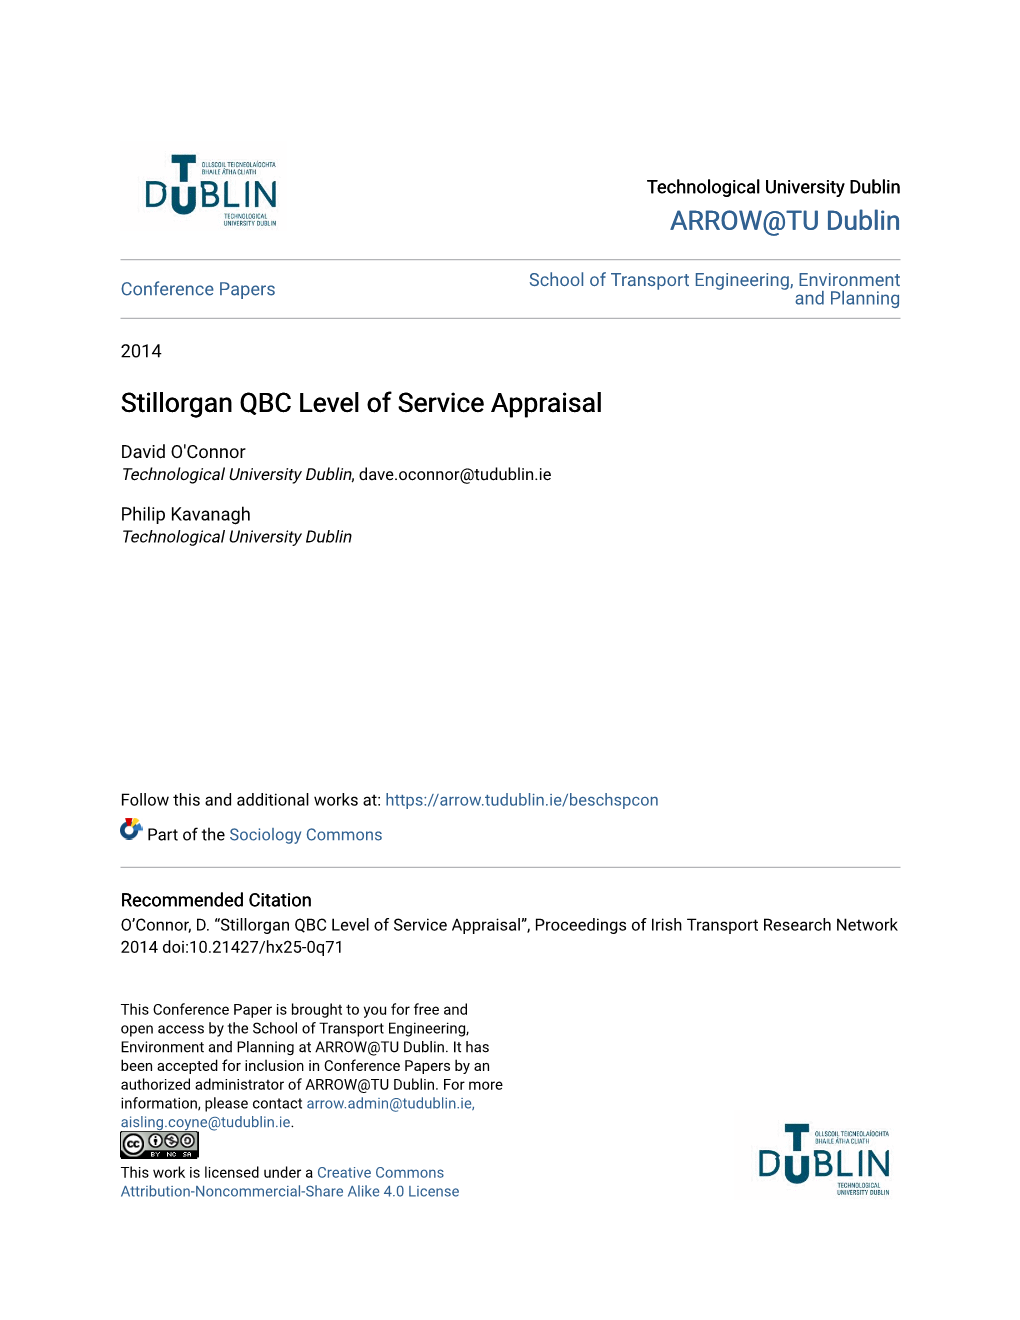 Stillorgan QBC Level of Service Appraisal